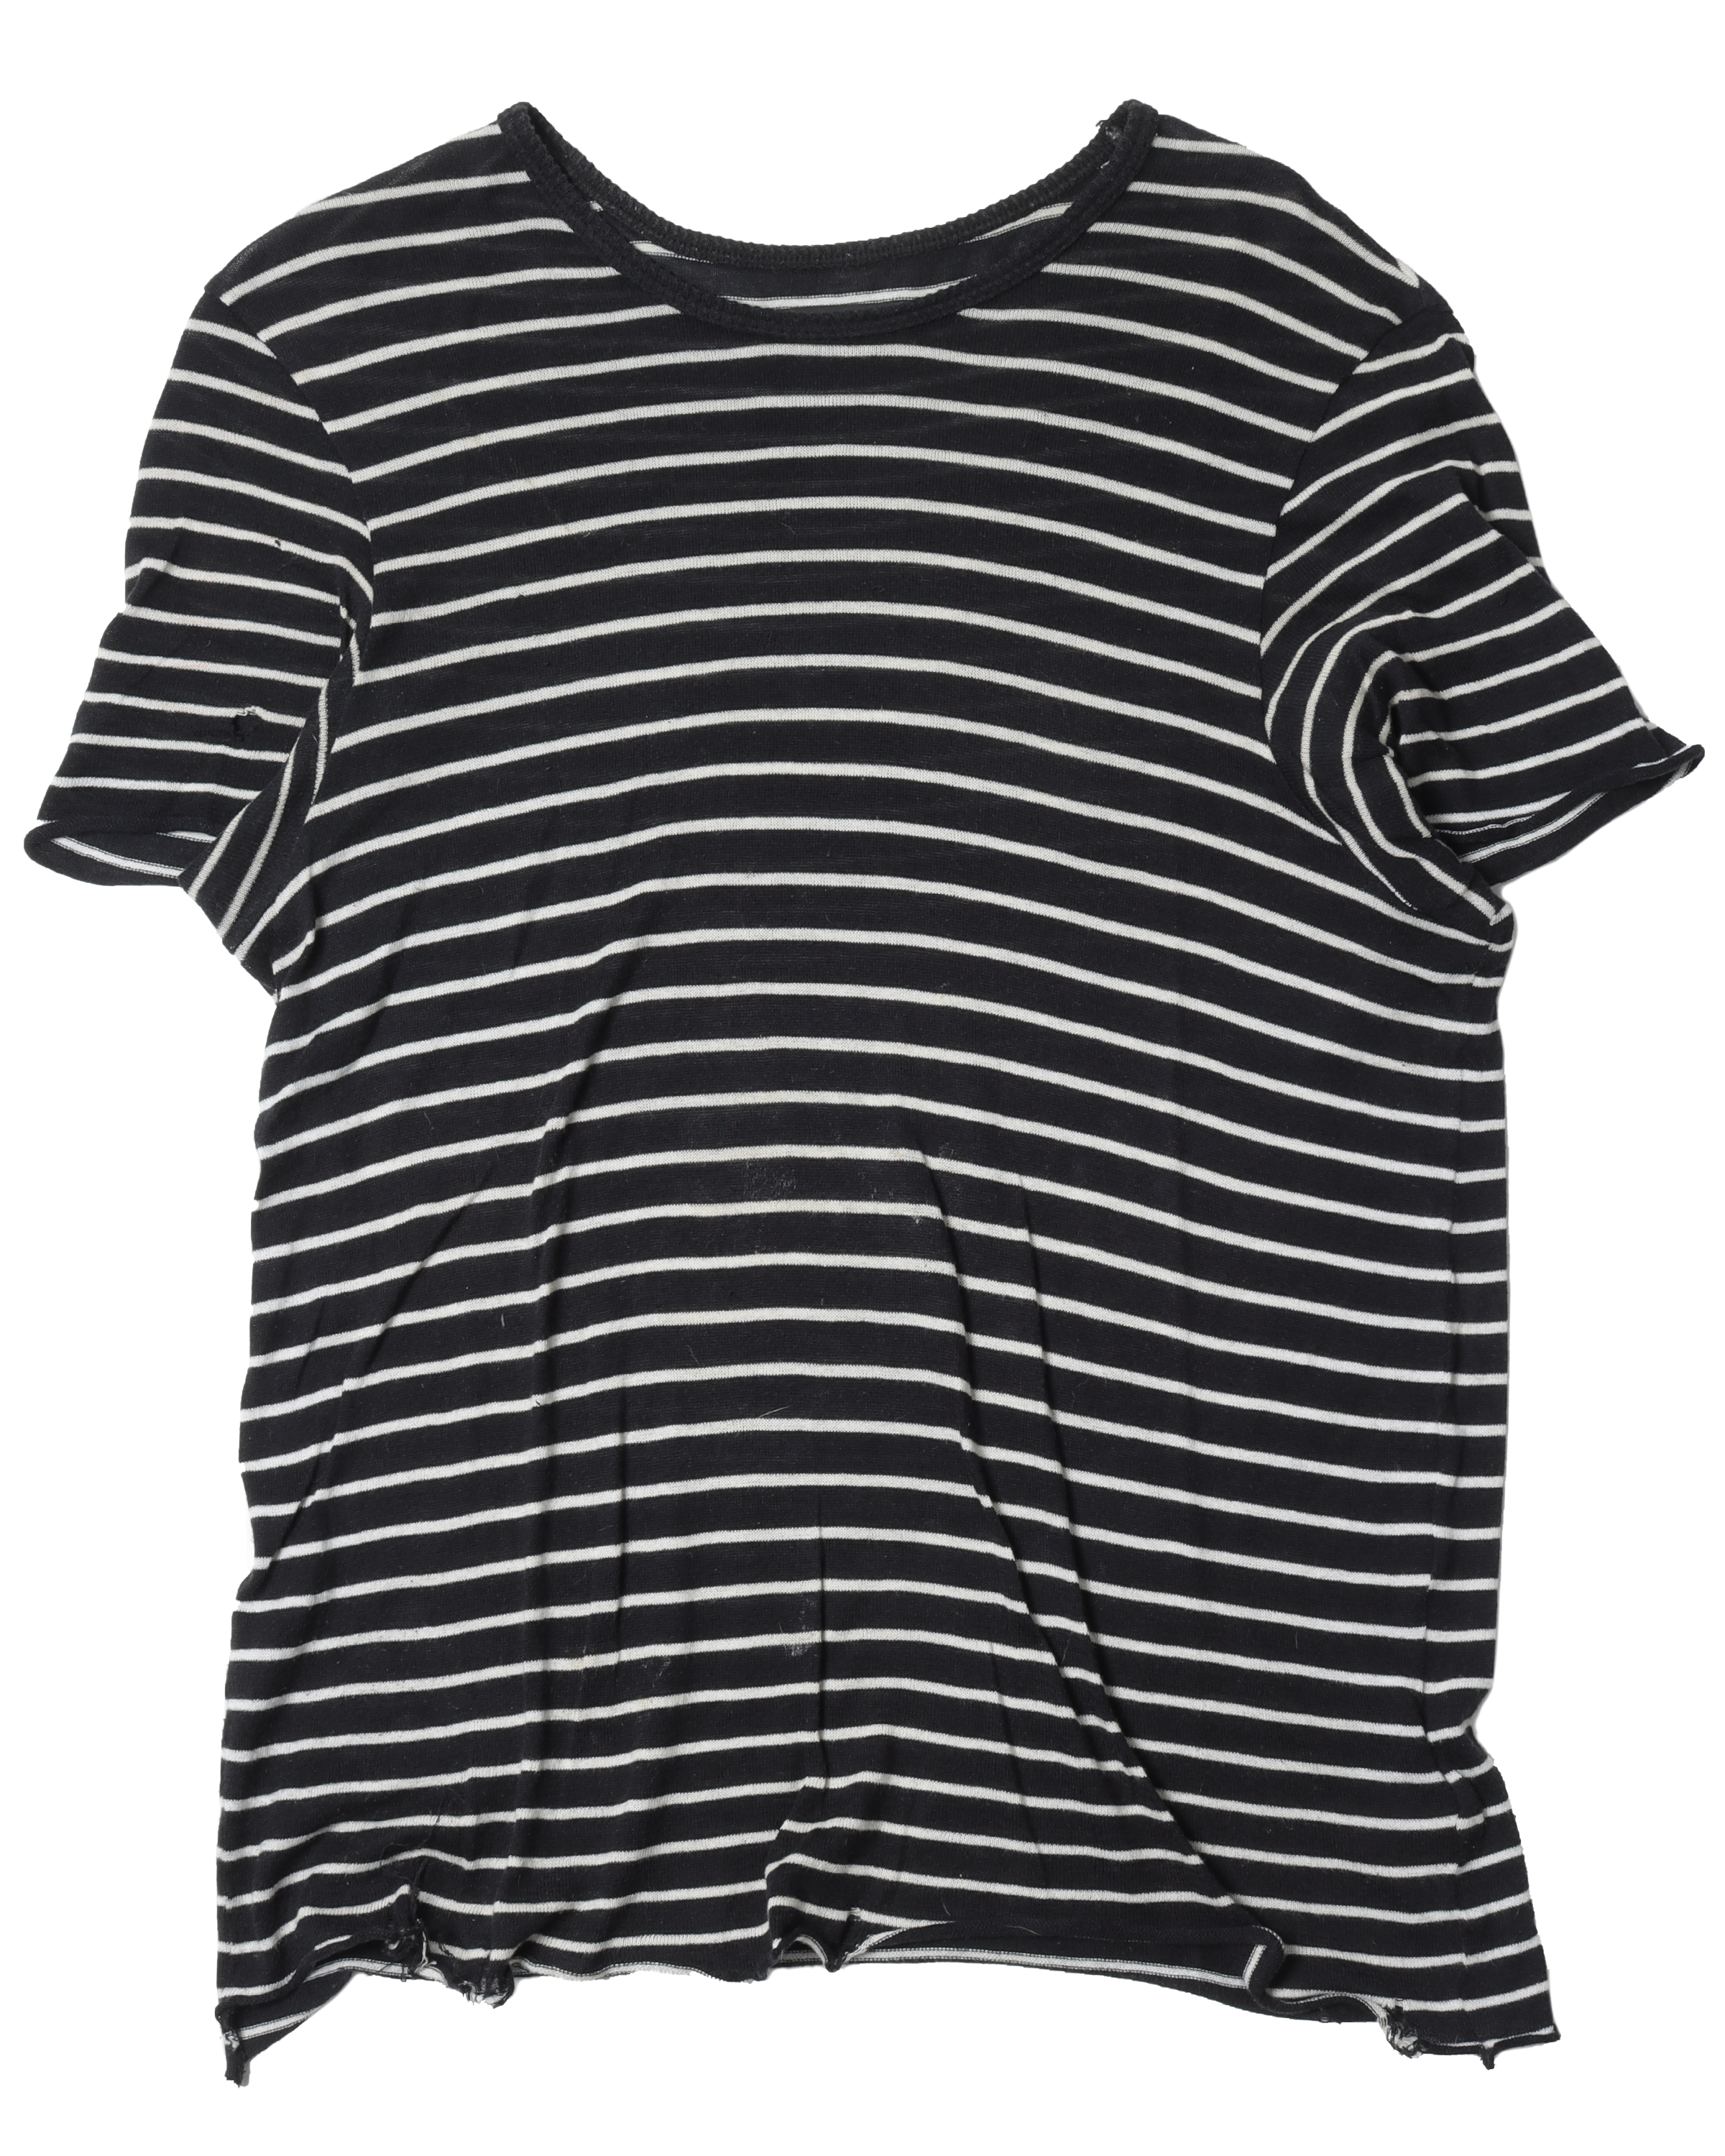 Distressed Striped T-Shirt